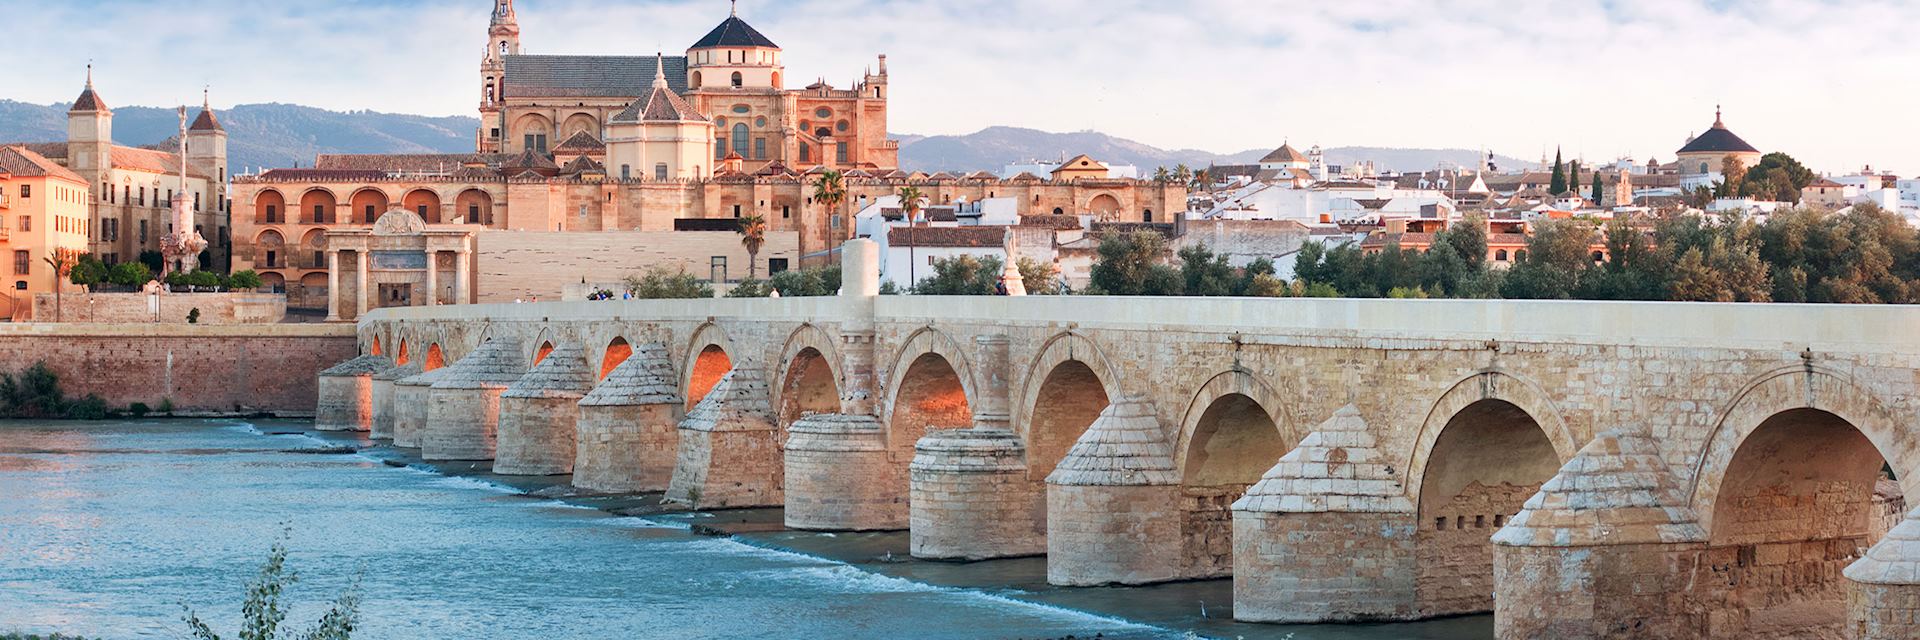 Roman Bridge and Guadalquivir river, Great Mosque, Córdoba